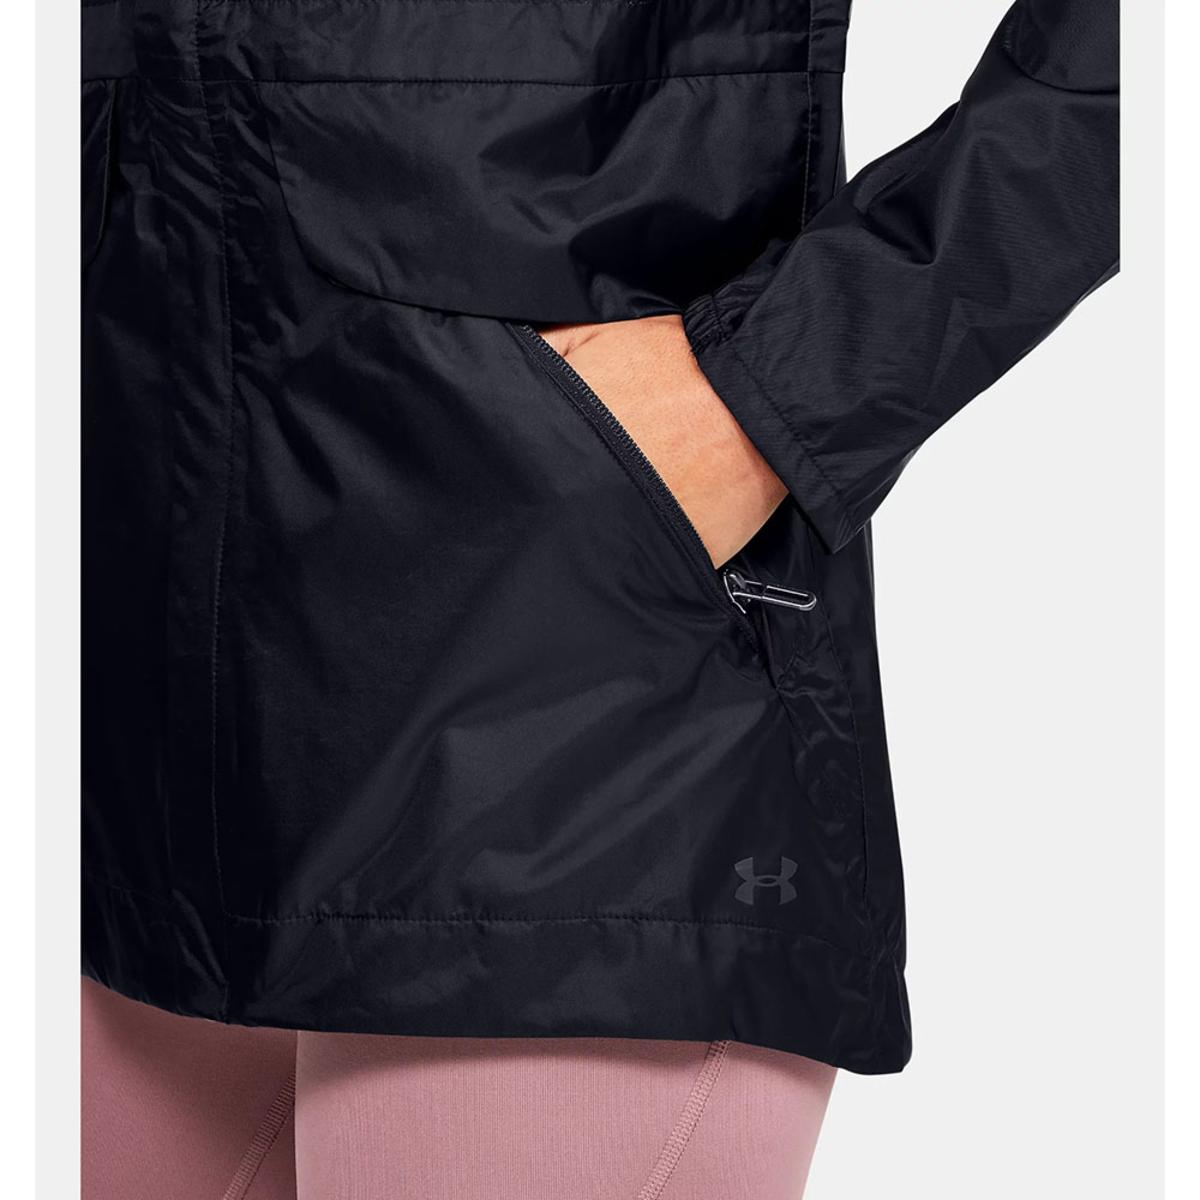 Under Armour Women's Cloudstrike Shell Jacket - Tall